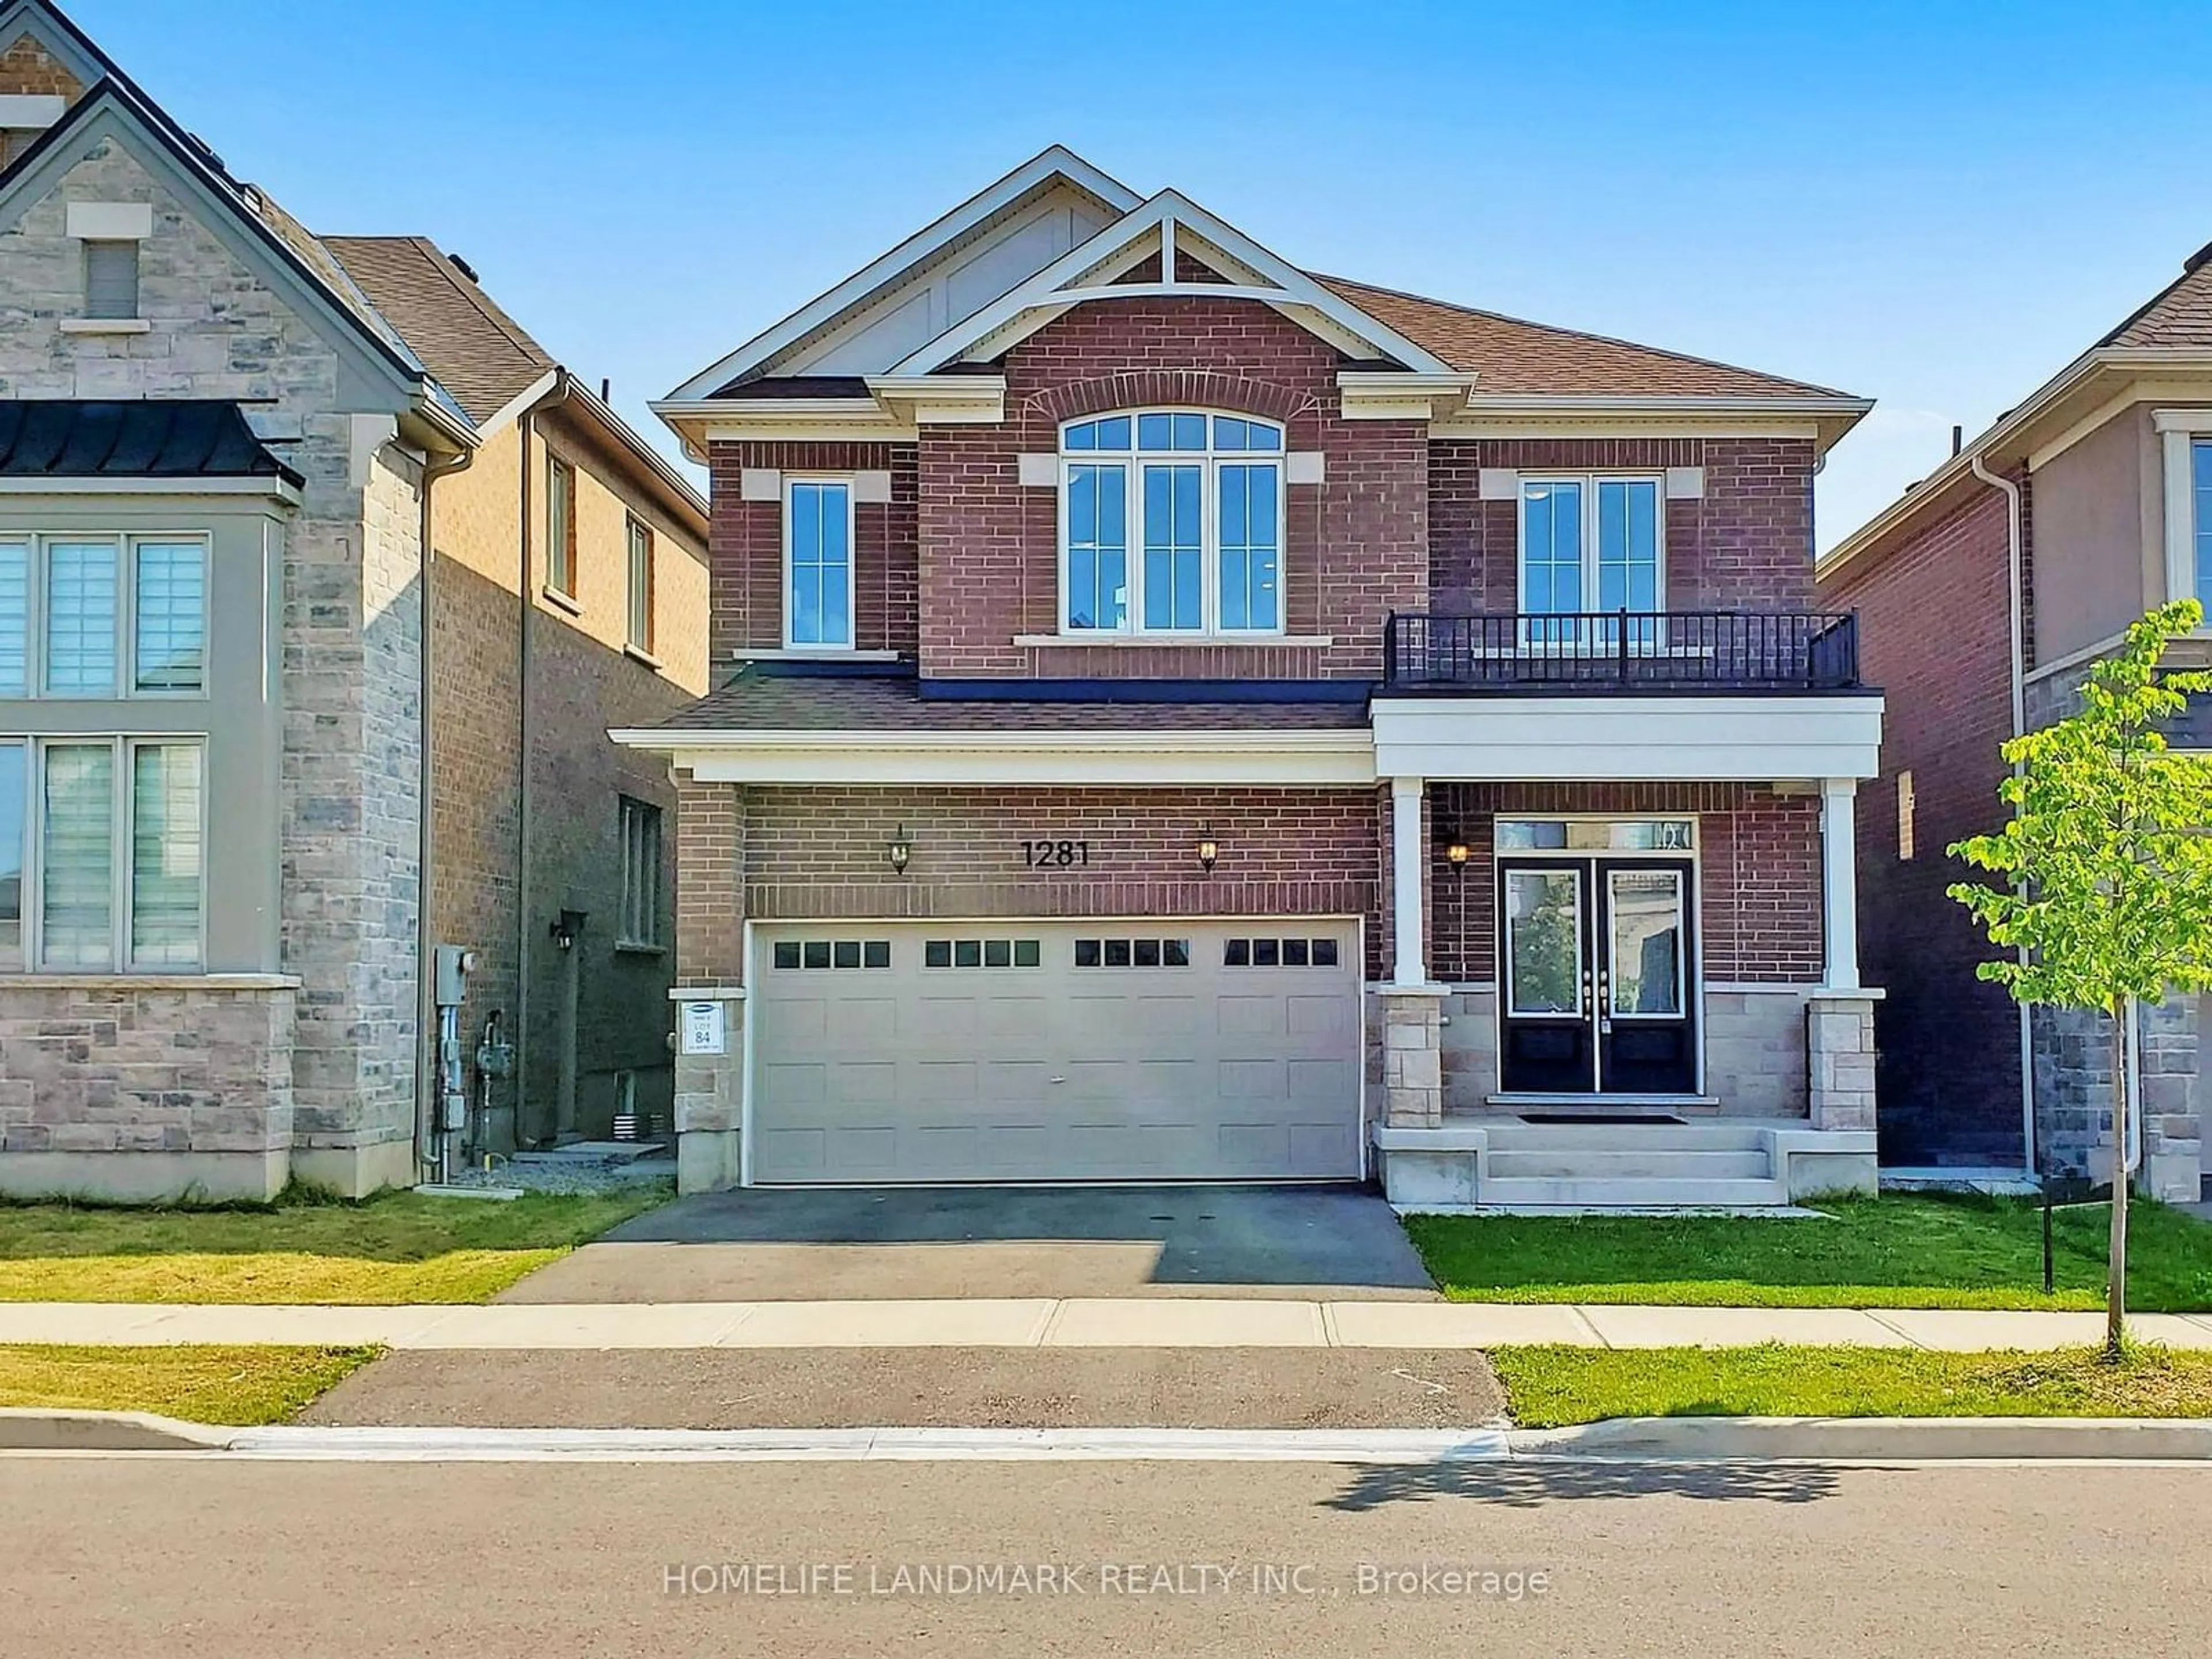 Home with brick exterior material for 1281 Whitney Terr, Milton Ontario L9E 1K9